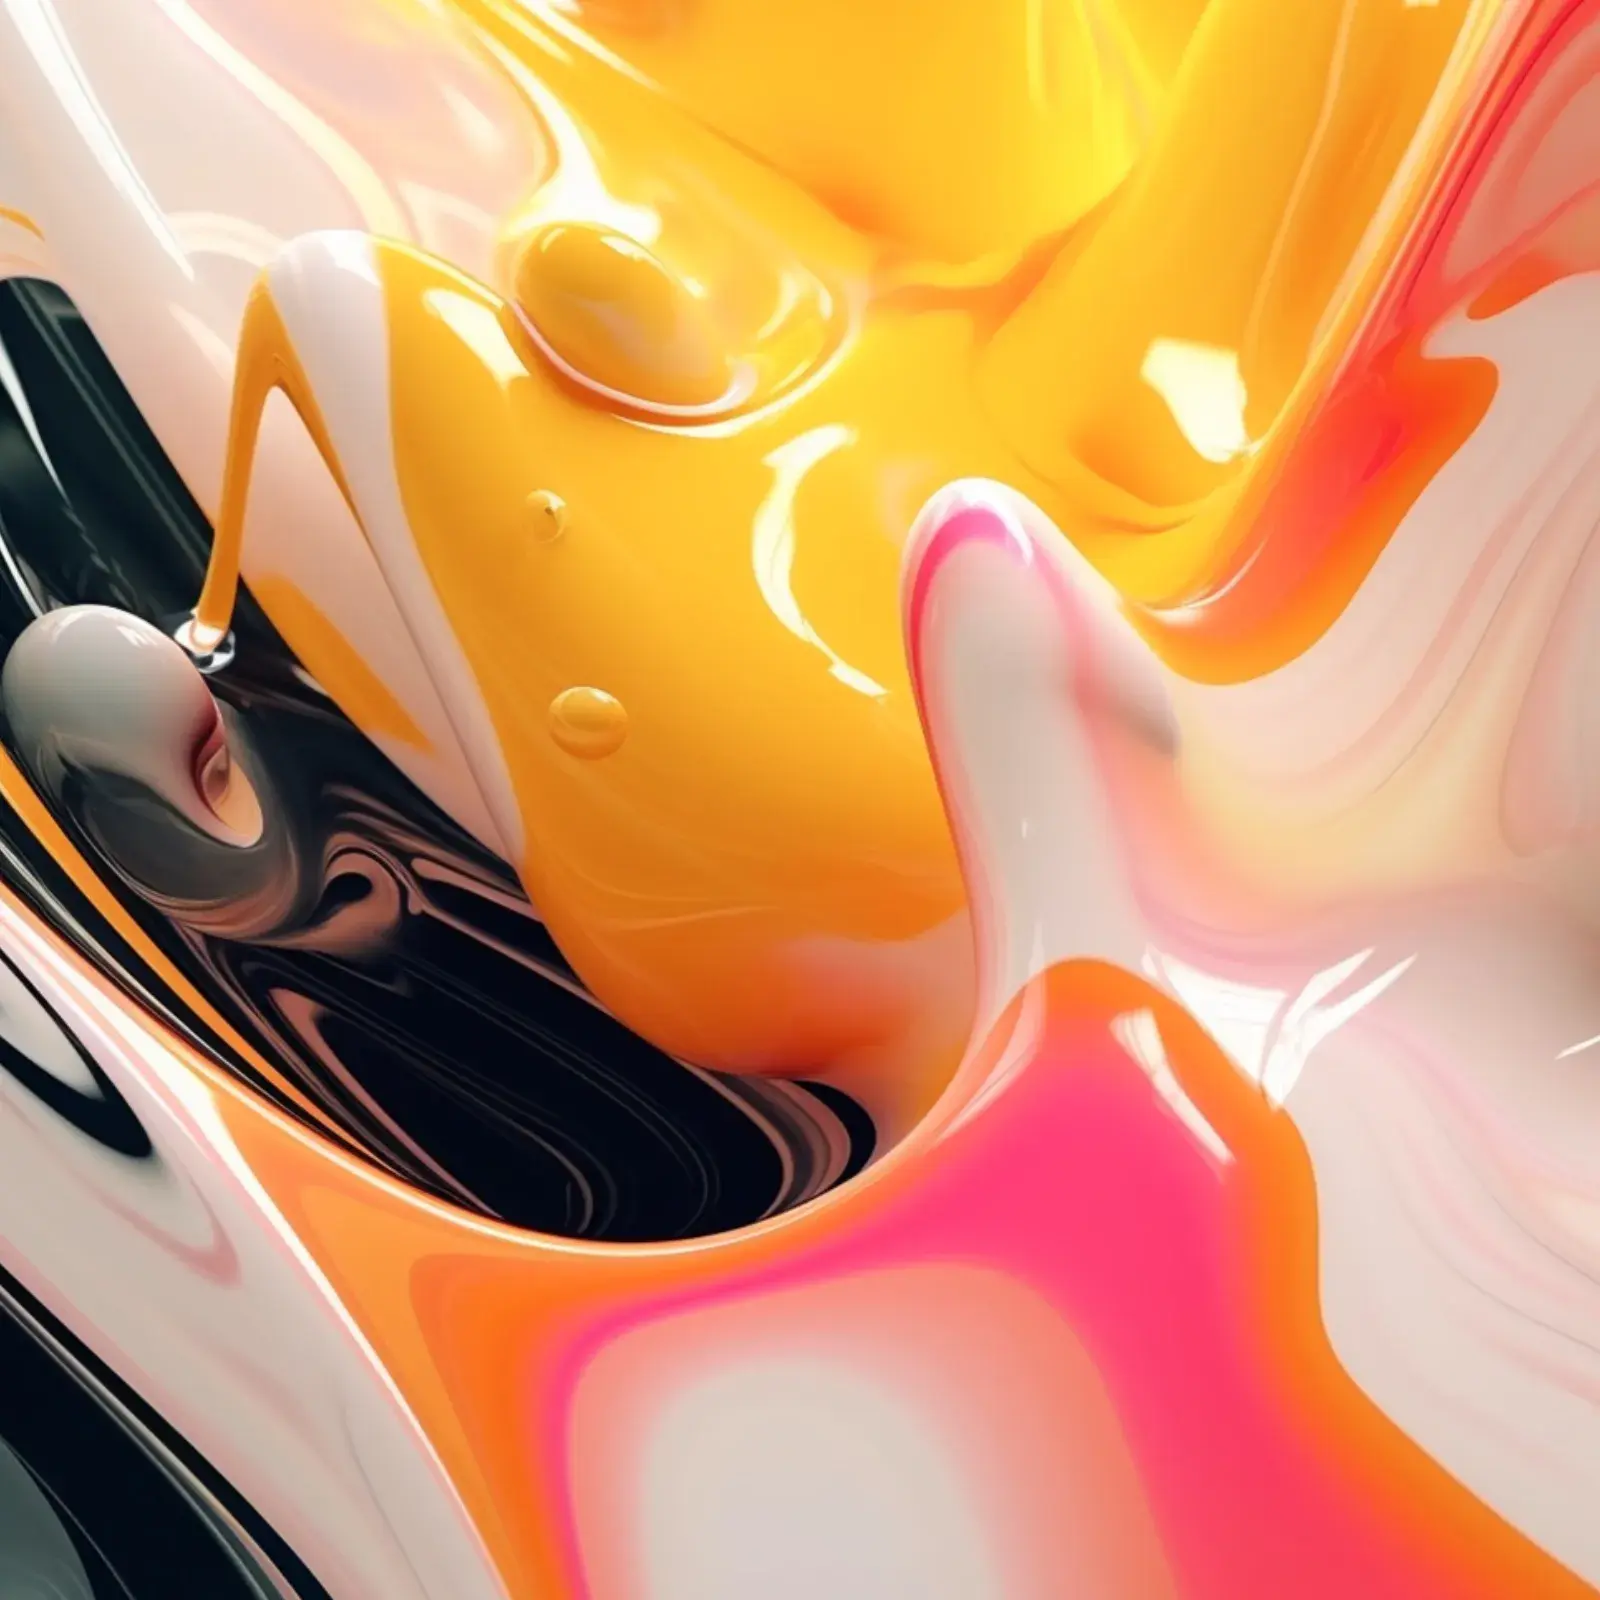 Liquid shapes and retro-Futuristic vibes collide in a digital art extravaganza